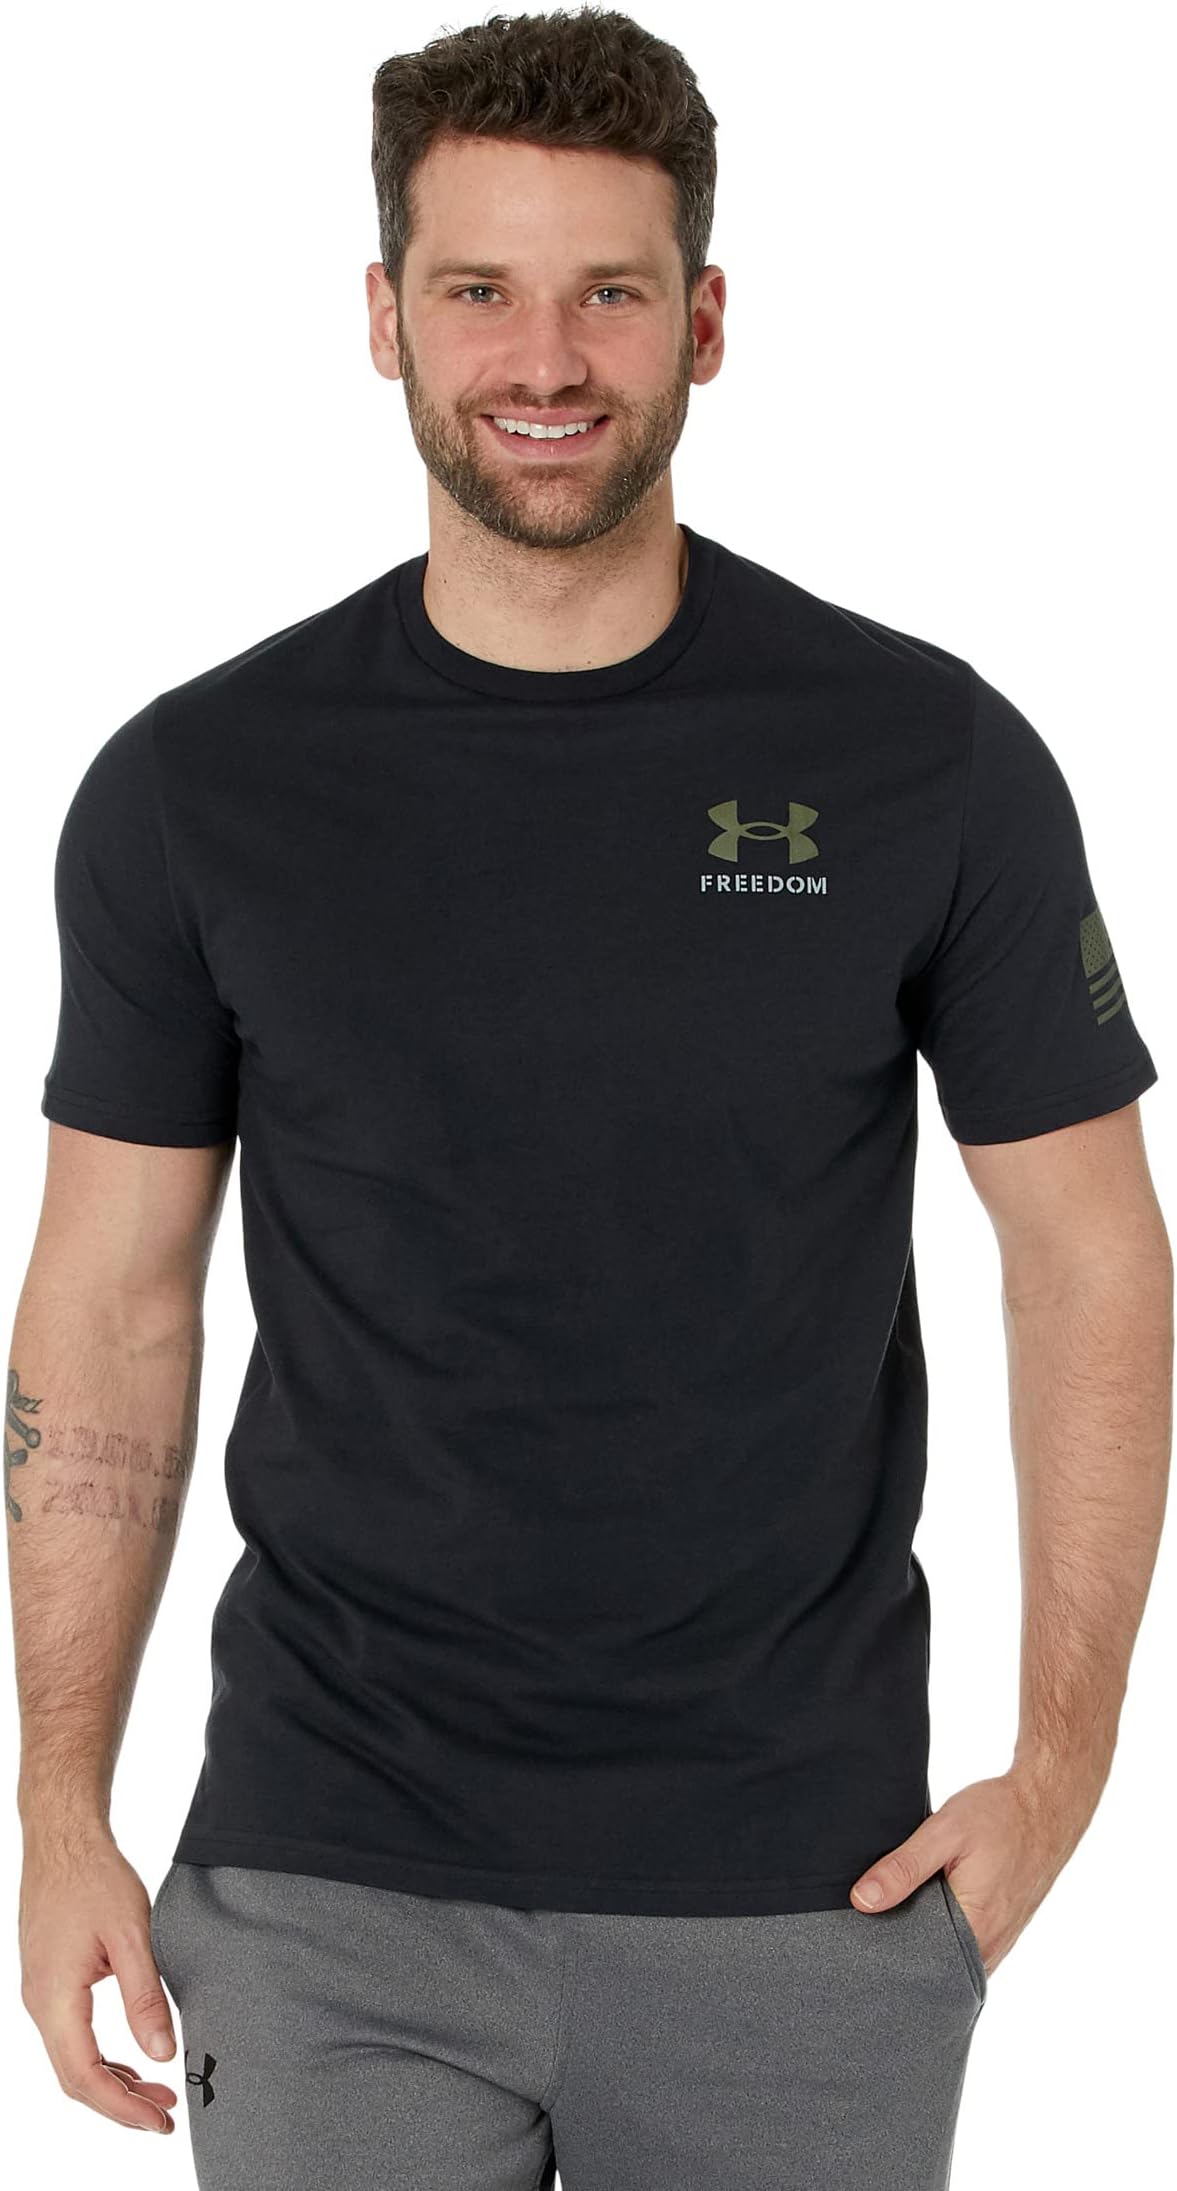 Новая футболка со знаменем свободы Under Armour, цвет Black/Steel